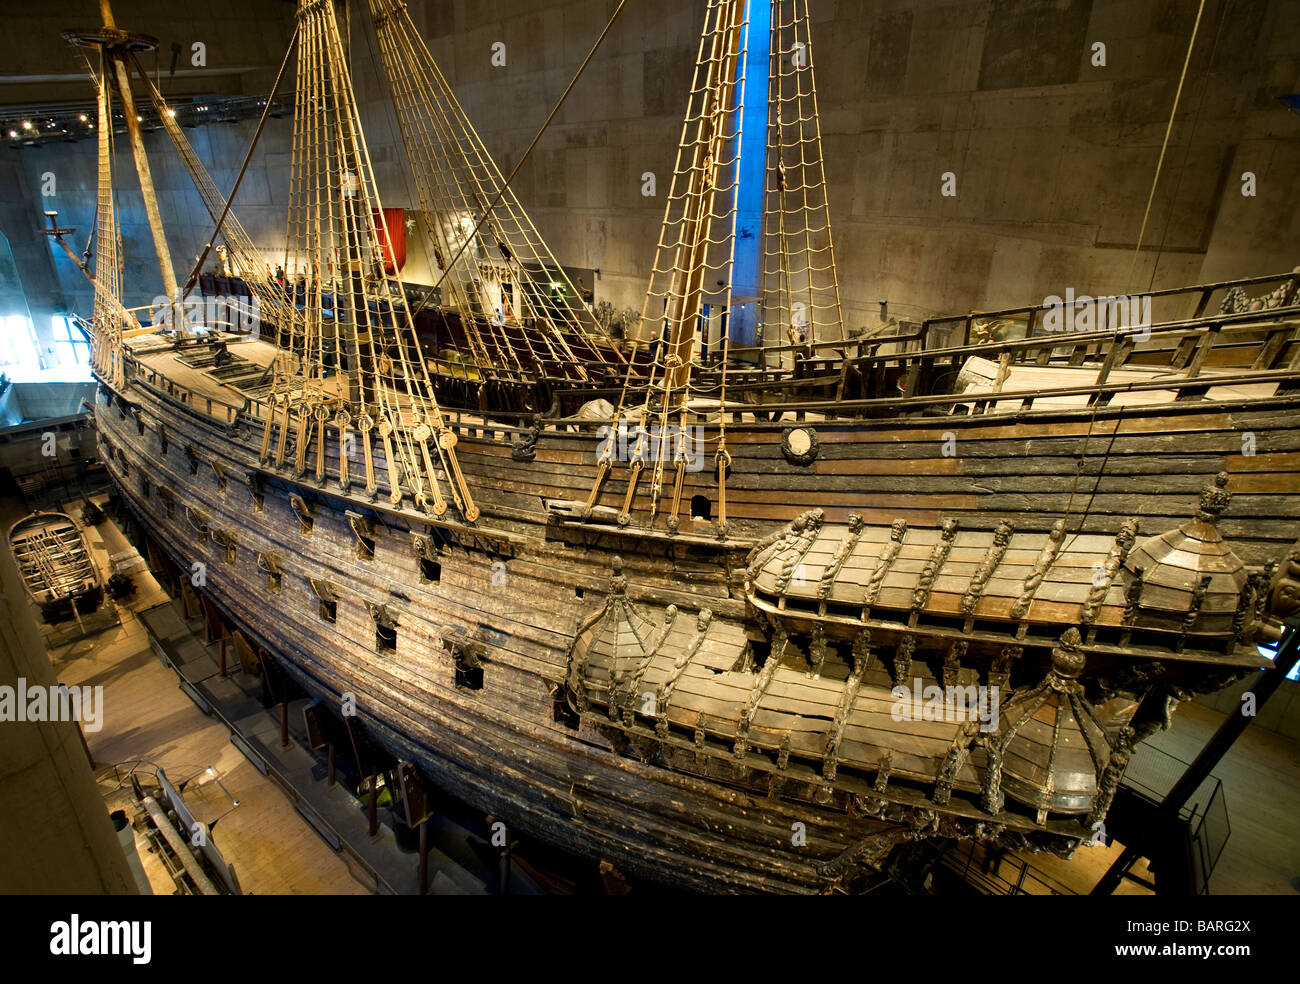 Swedish Warship Vasa High Resolution Stock Photography and Images - Alamy